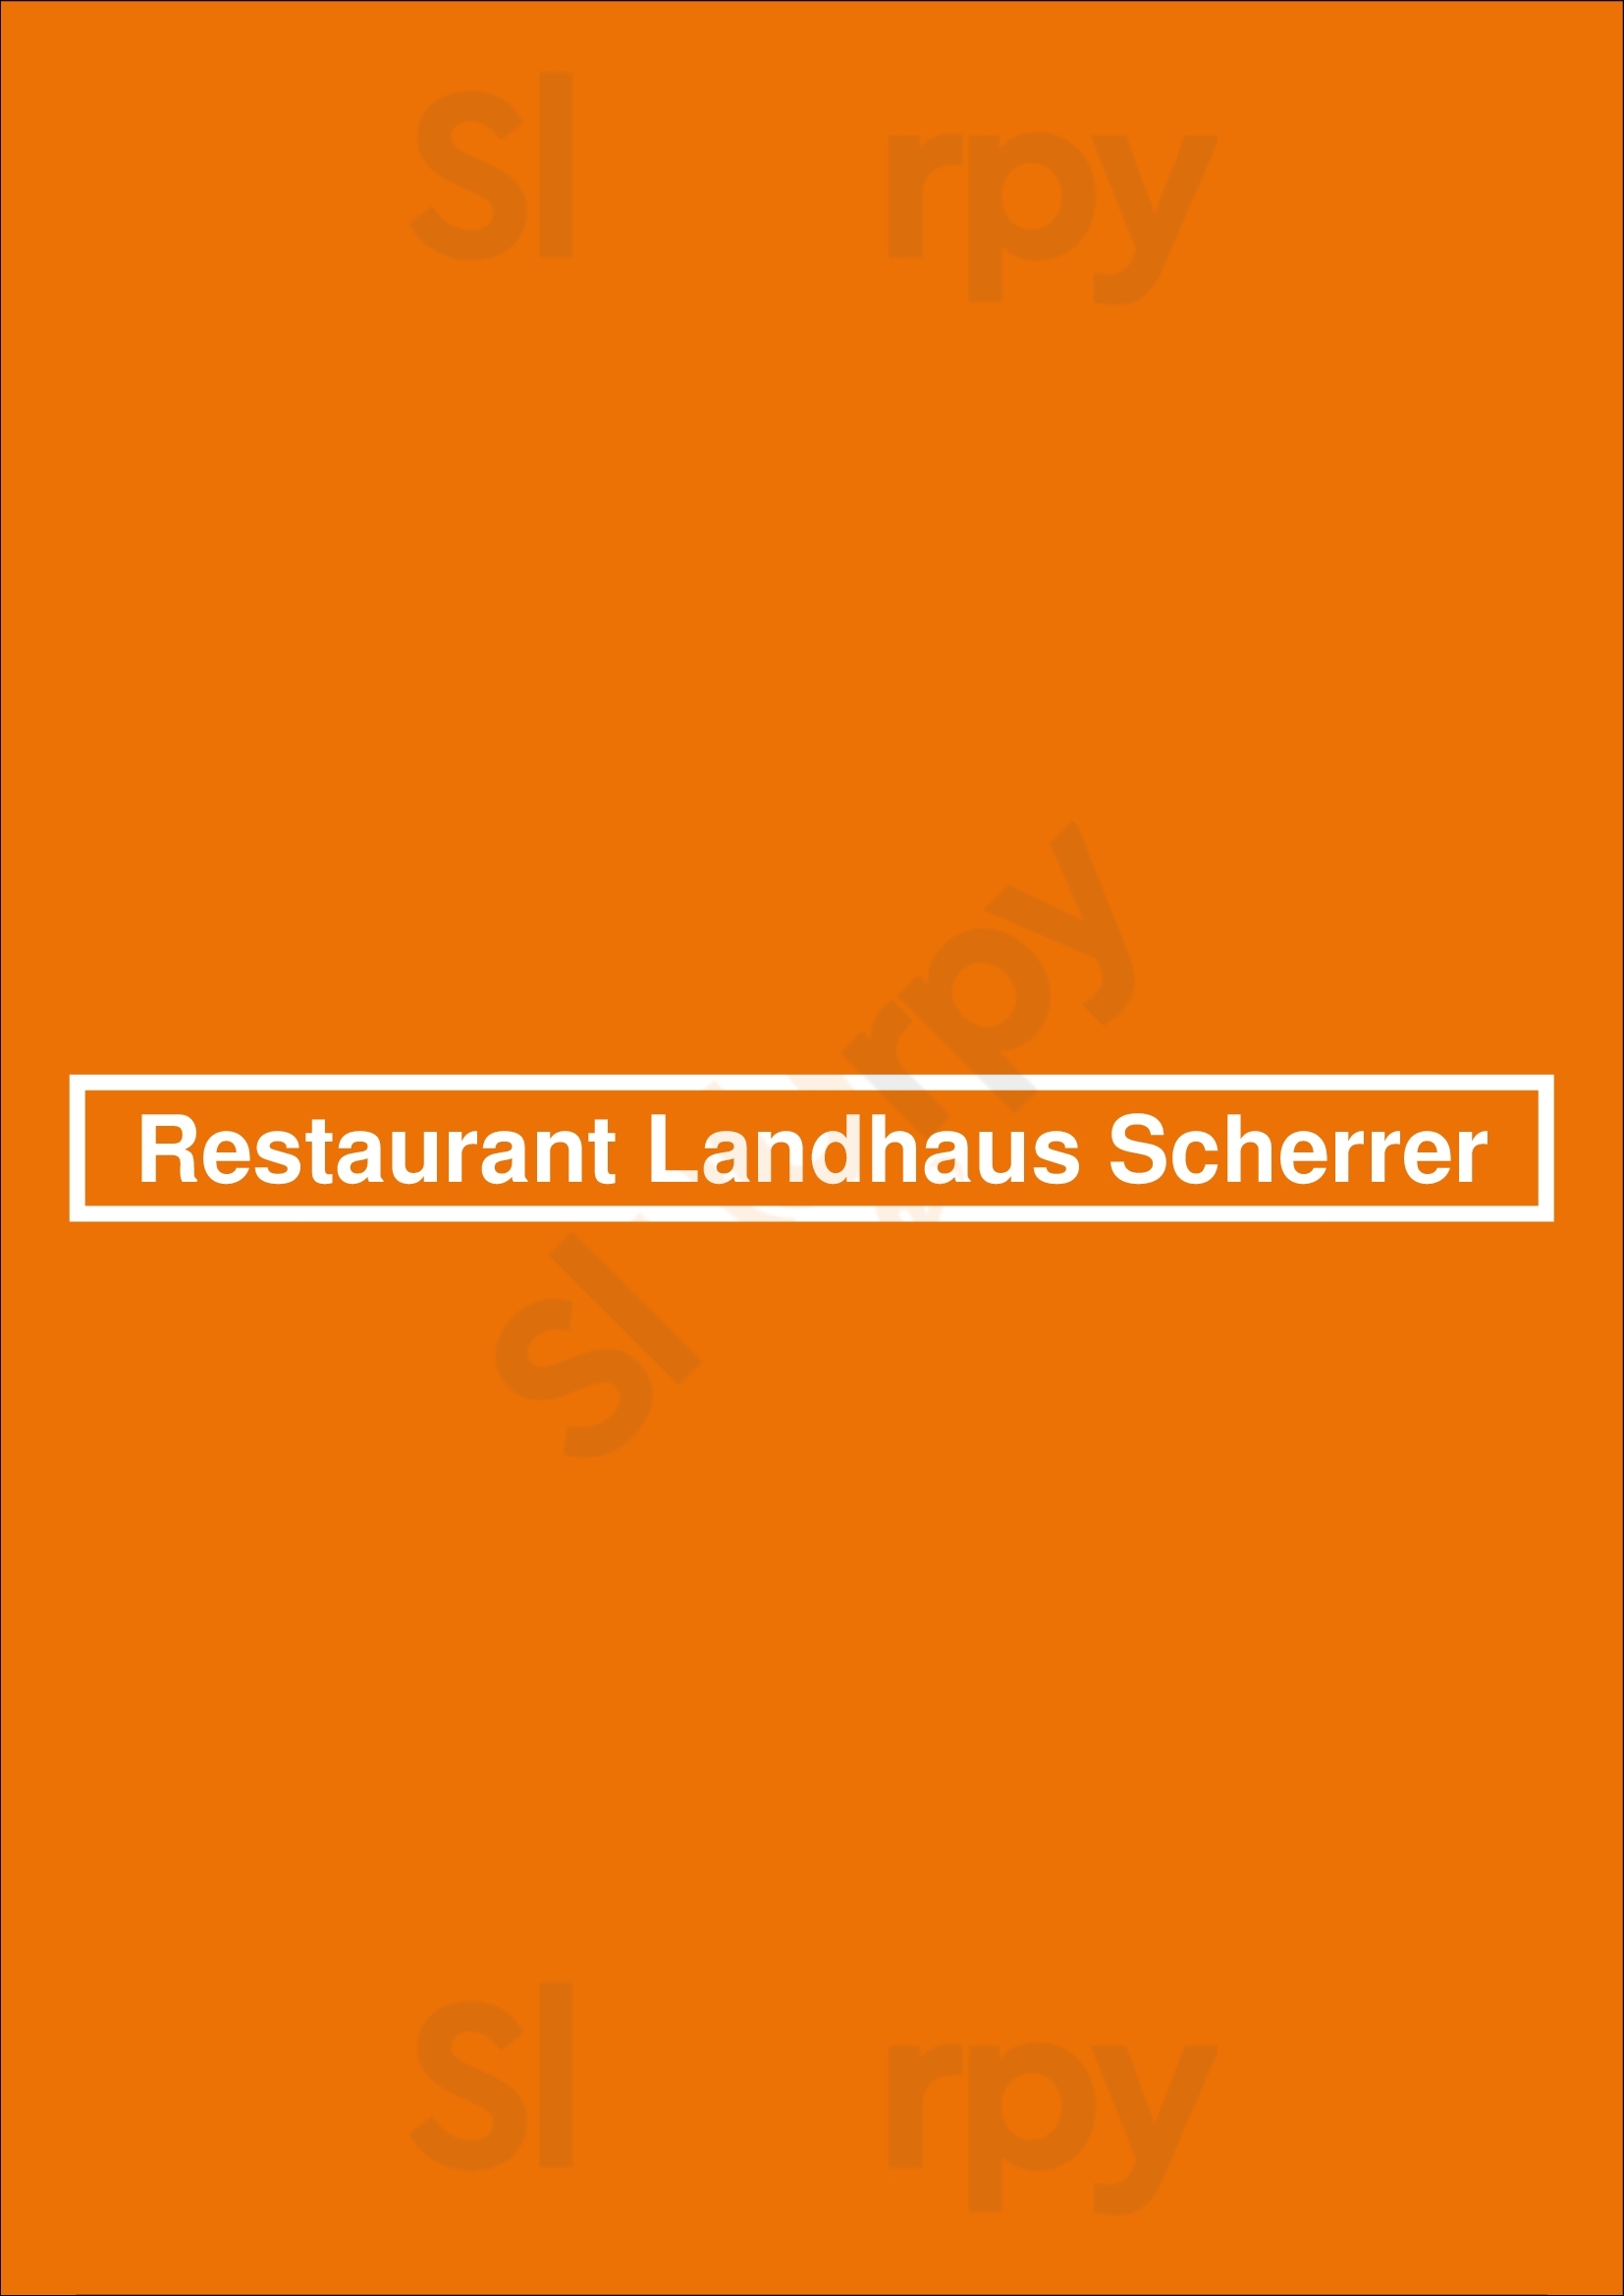 Landhaus Scherrer Hamburg Menu - 1